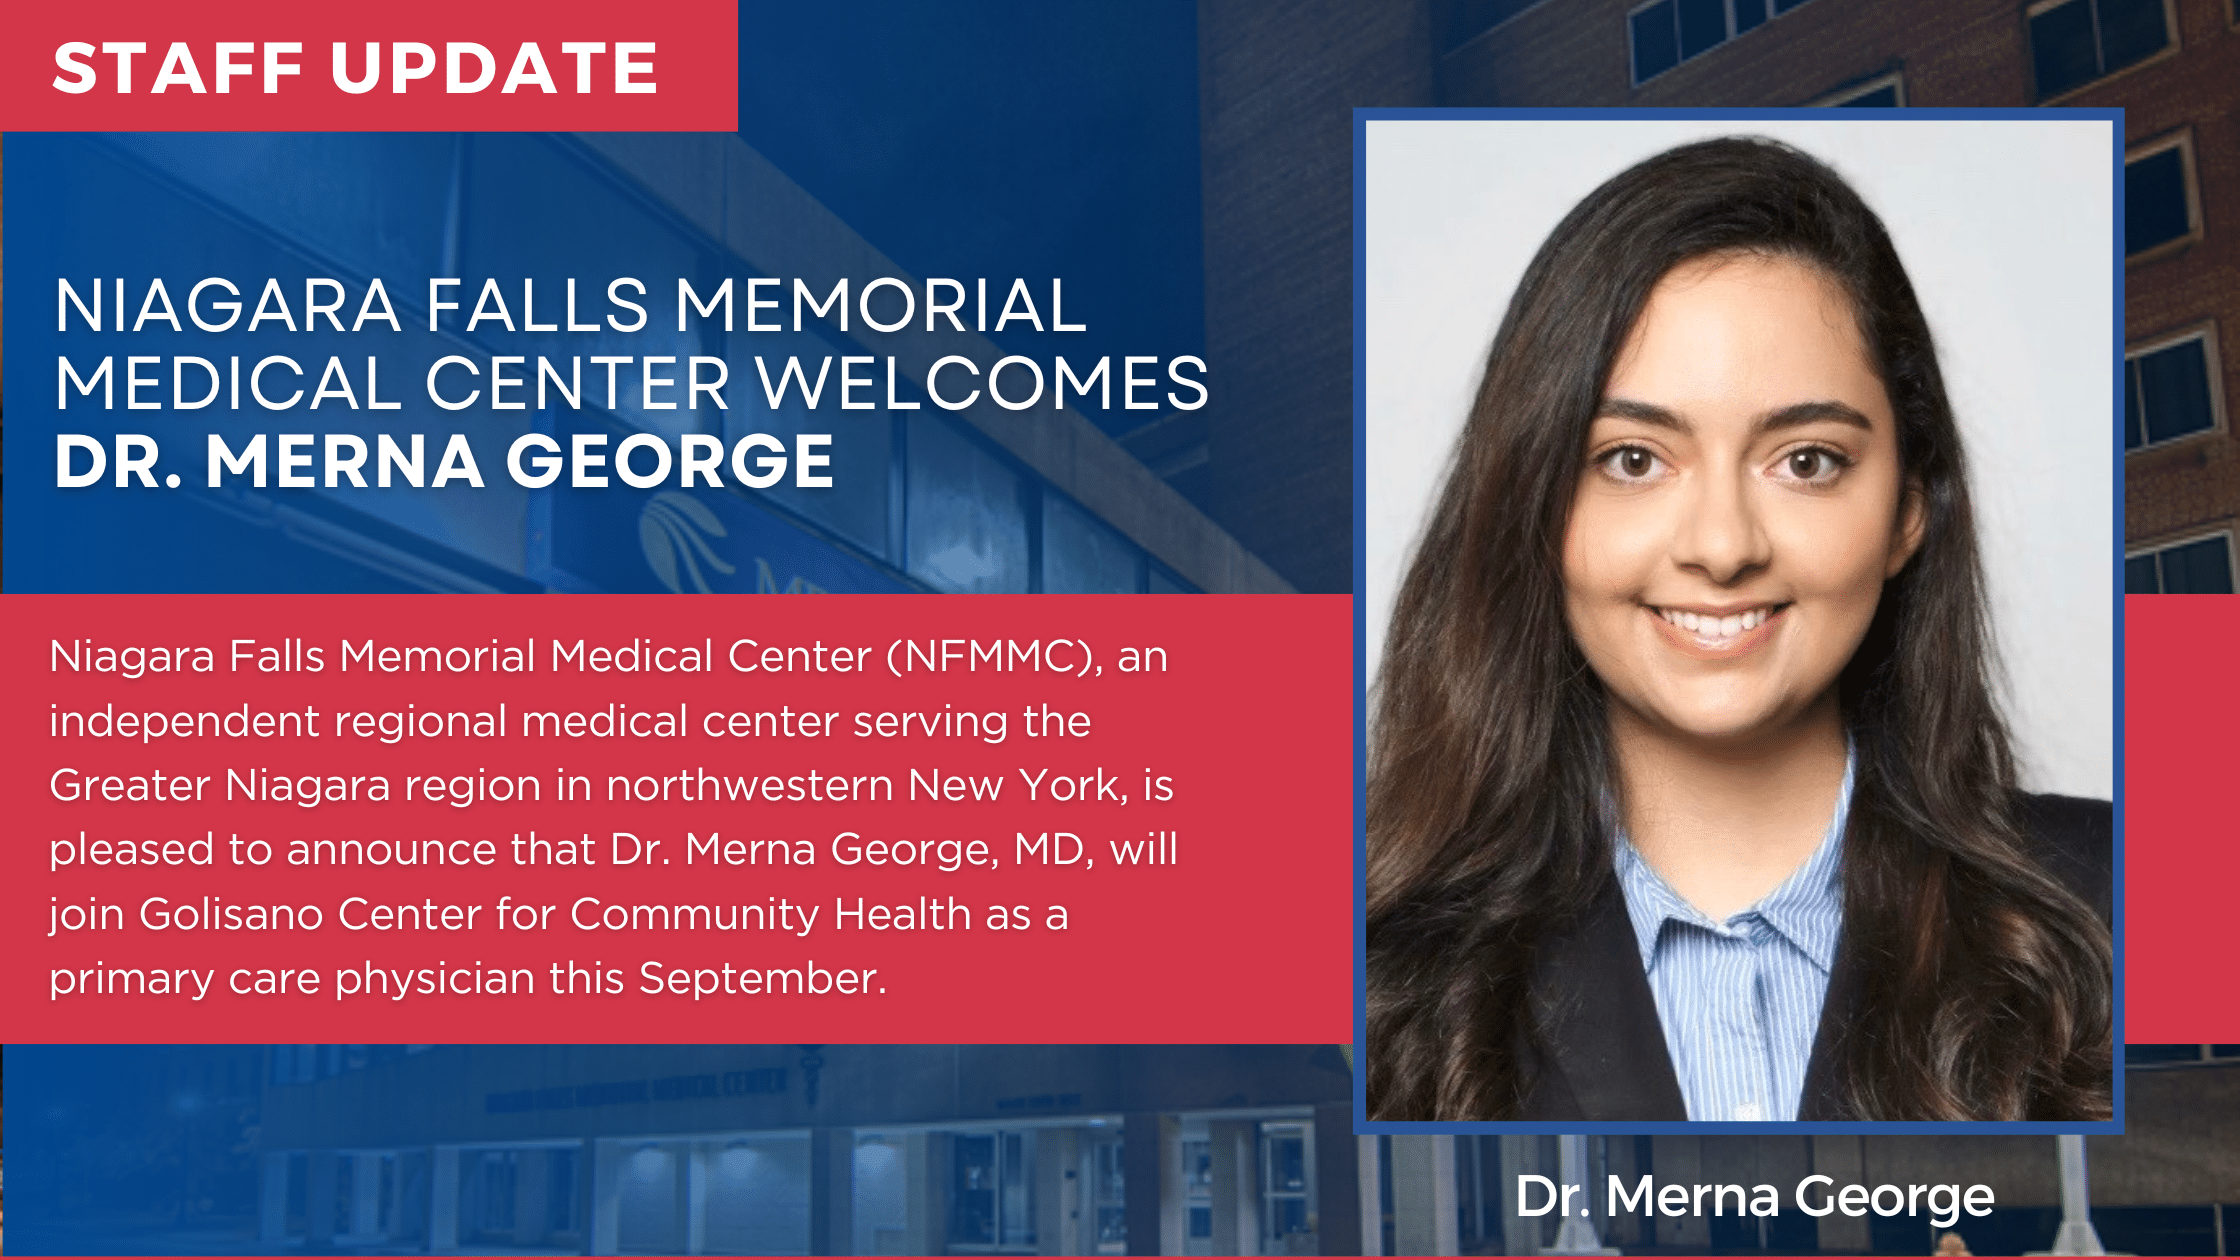 Niagara Falls Memorial Medical Center Welcomes Dr. Merna George to Golisano Center for Community Health